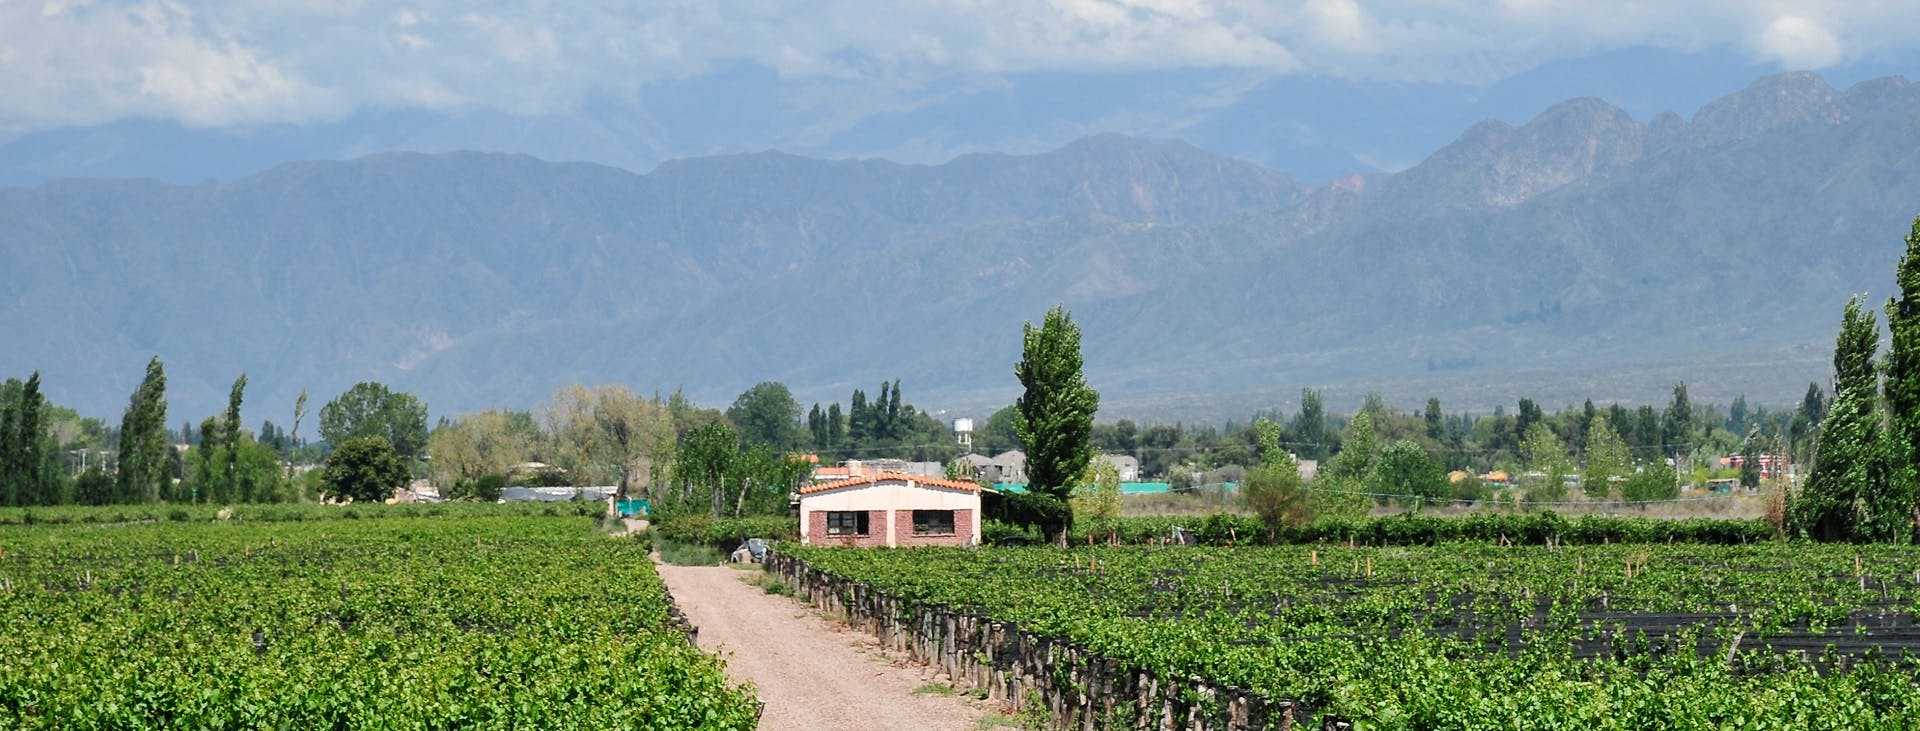 Mendoza half-day wine tour with tasting